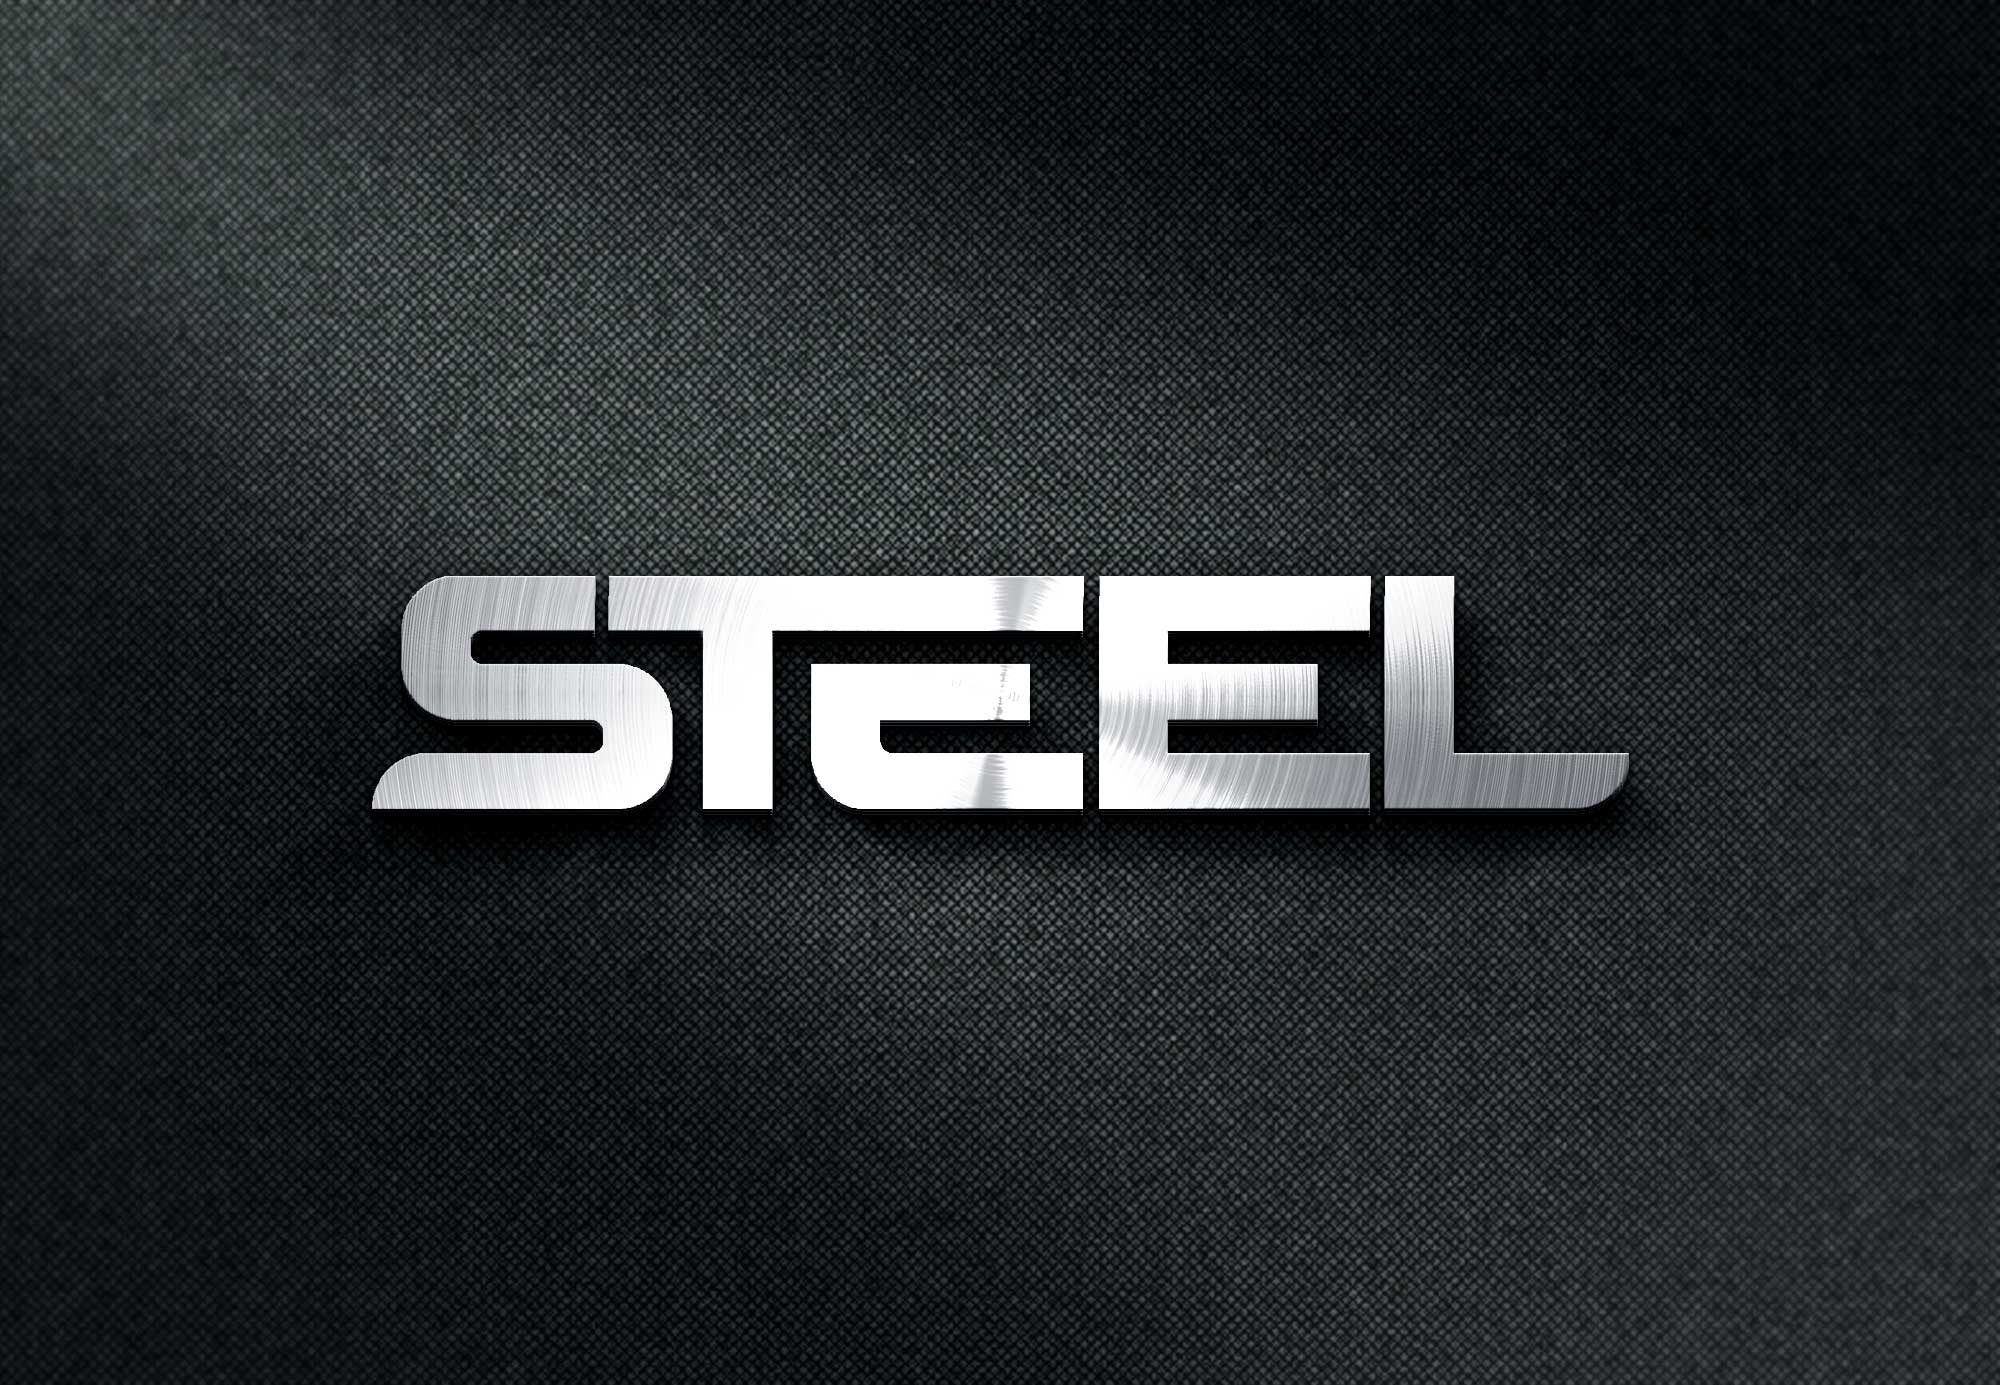 steel logo mockup